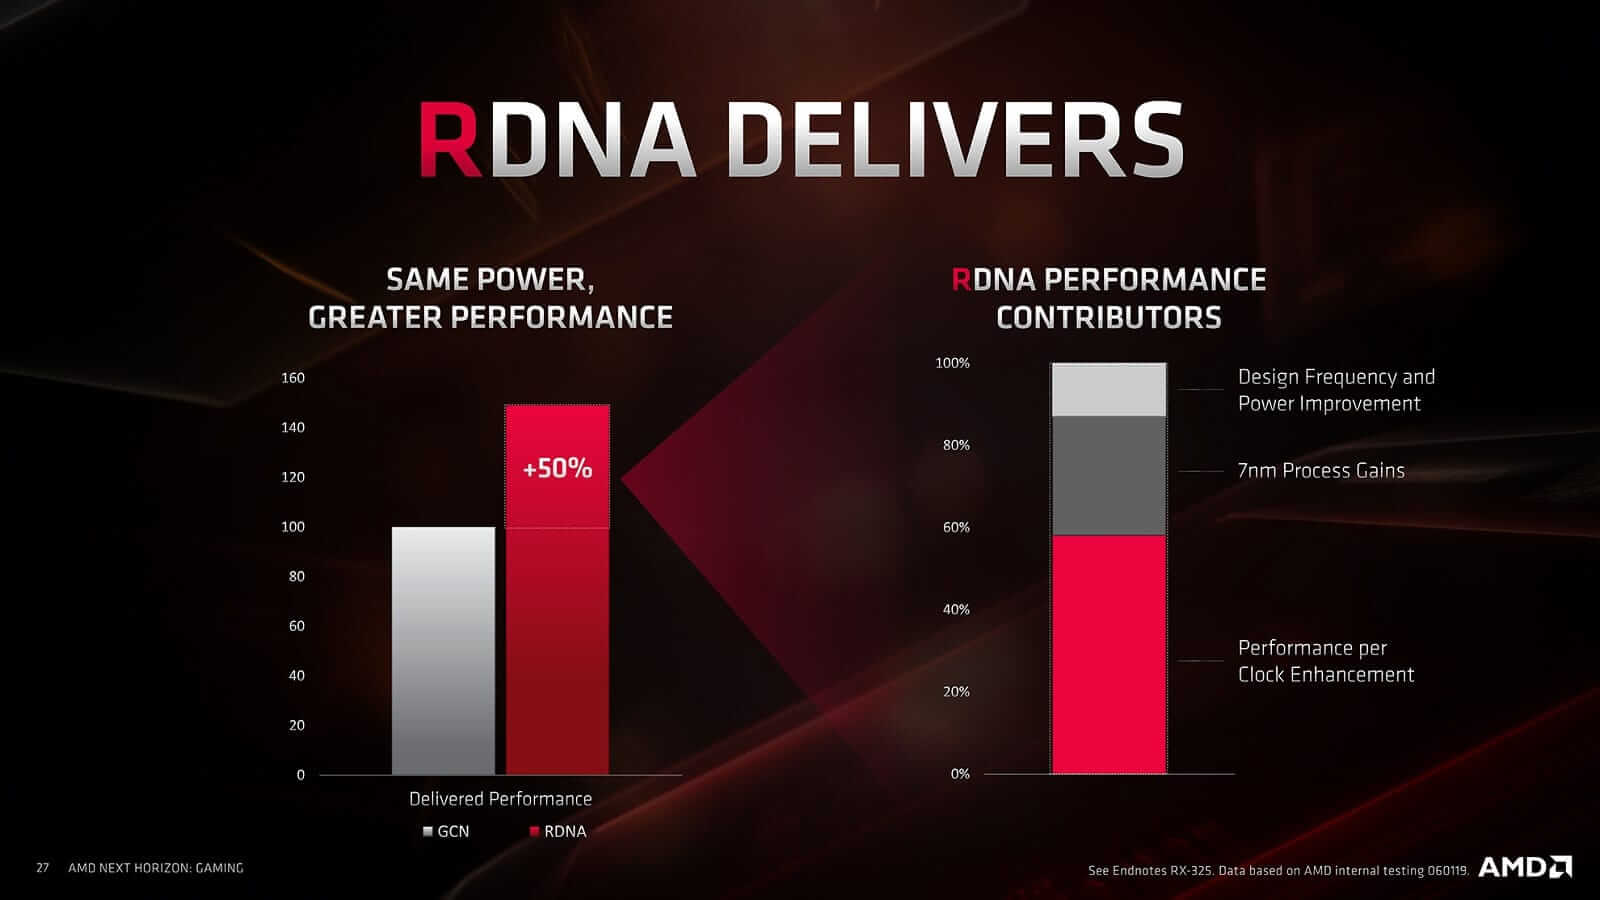 RDNA-Performance-Contributors.jpg